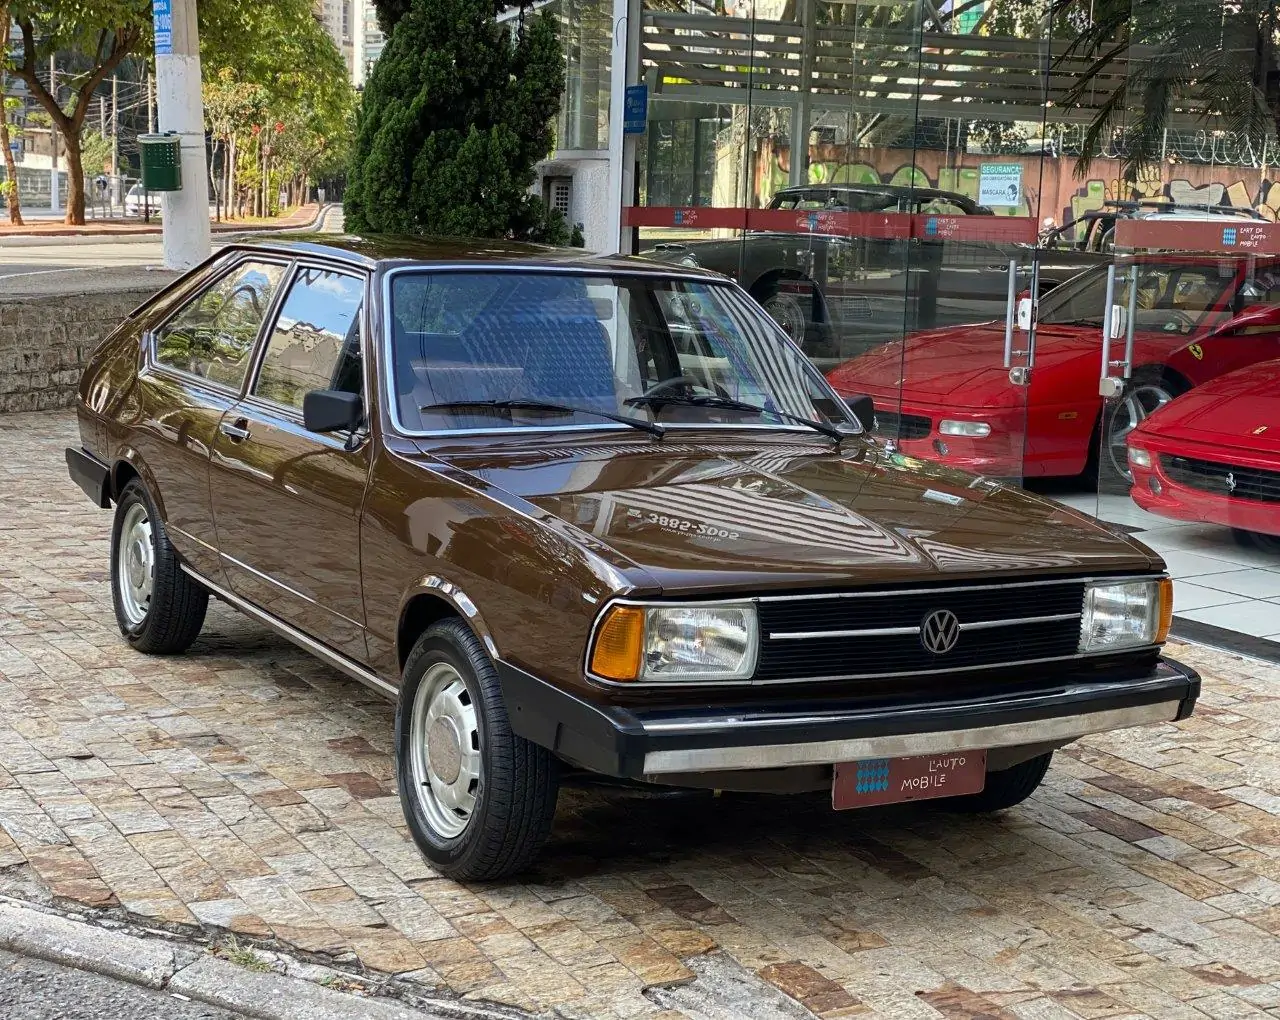 VW PASSAT LS - 1979